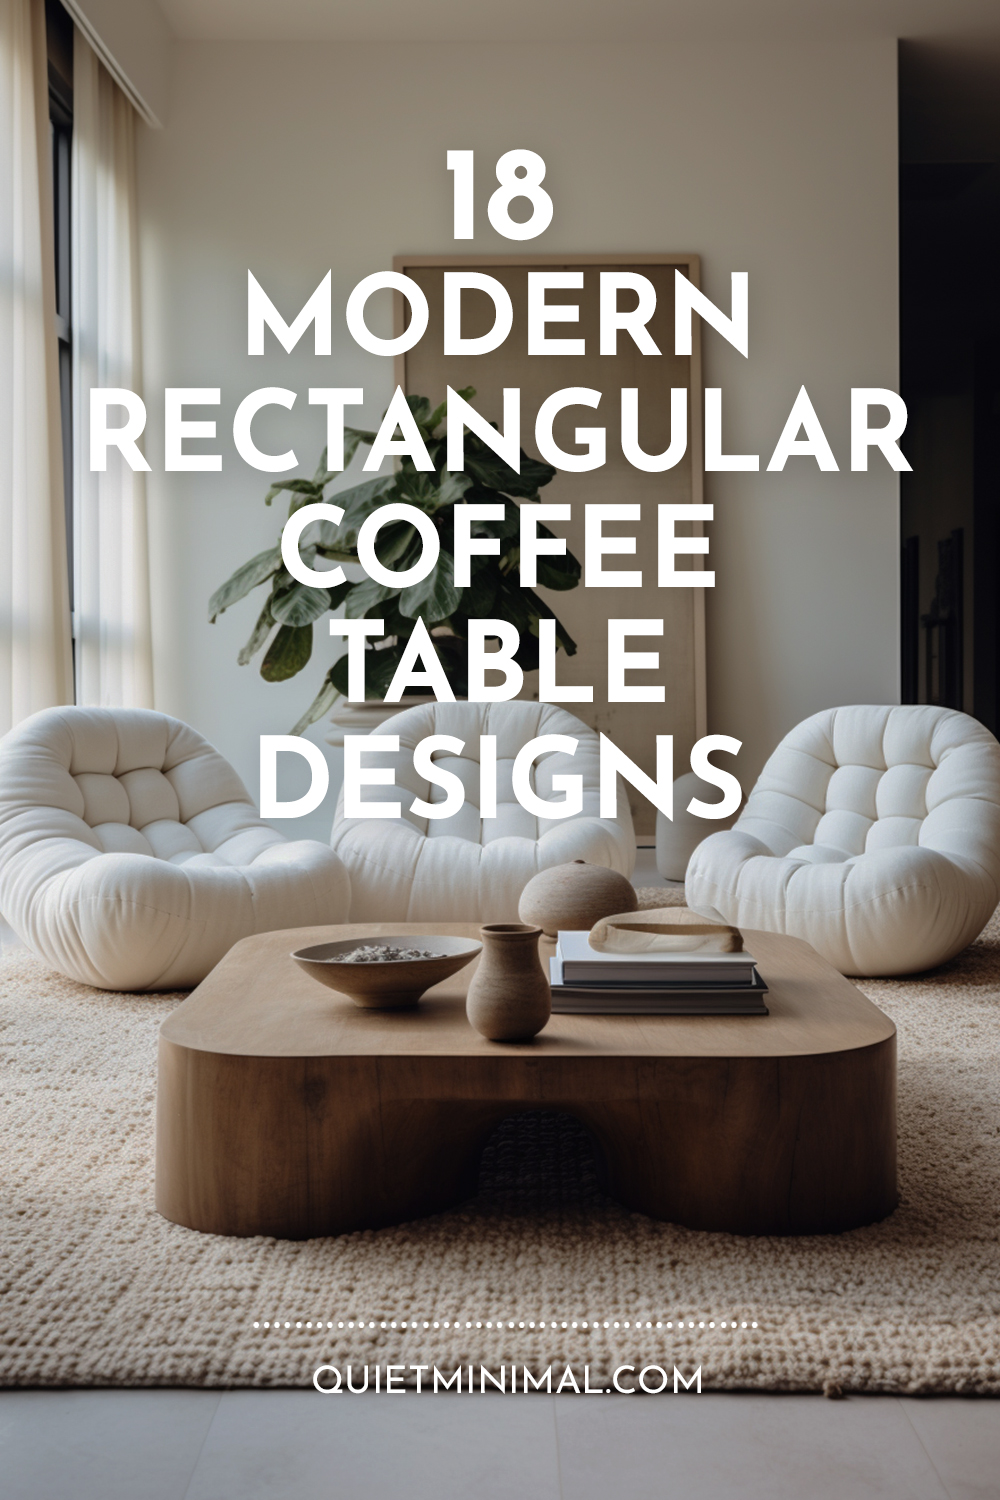 18 modern rectangular coffee table designs.